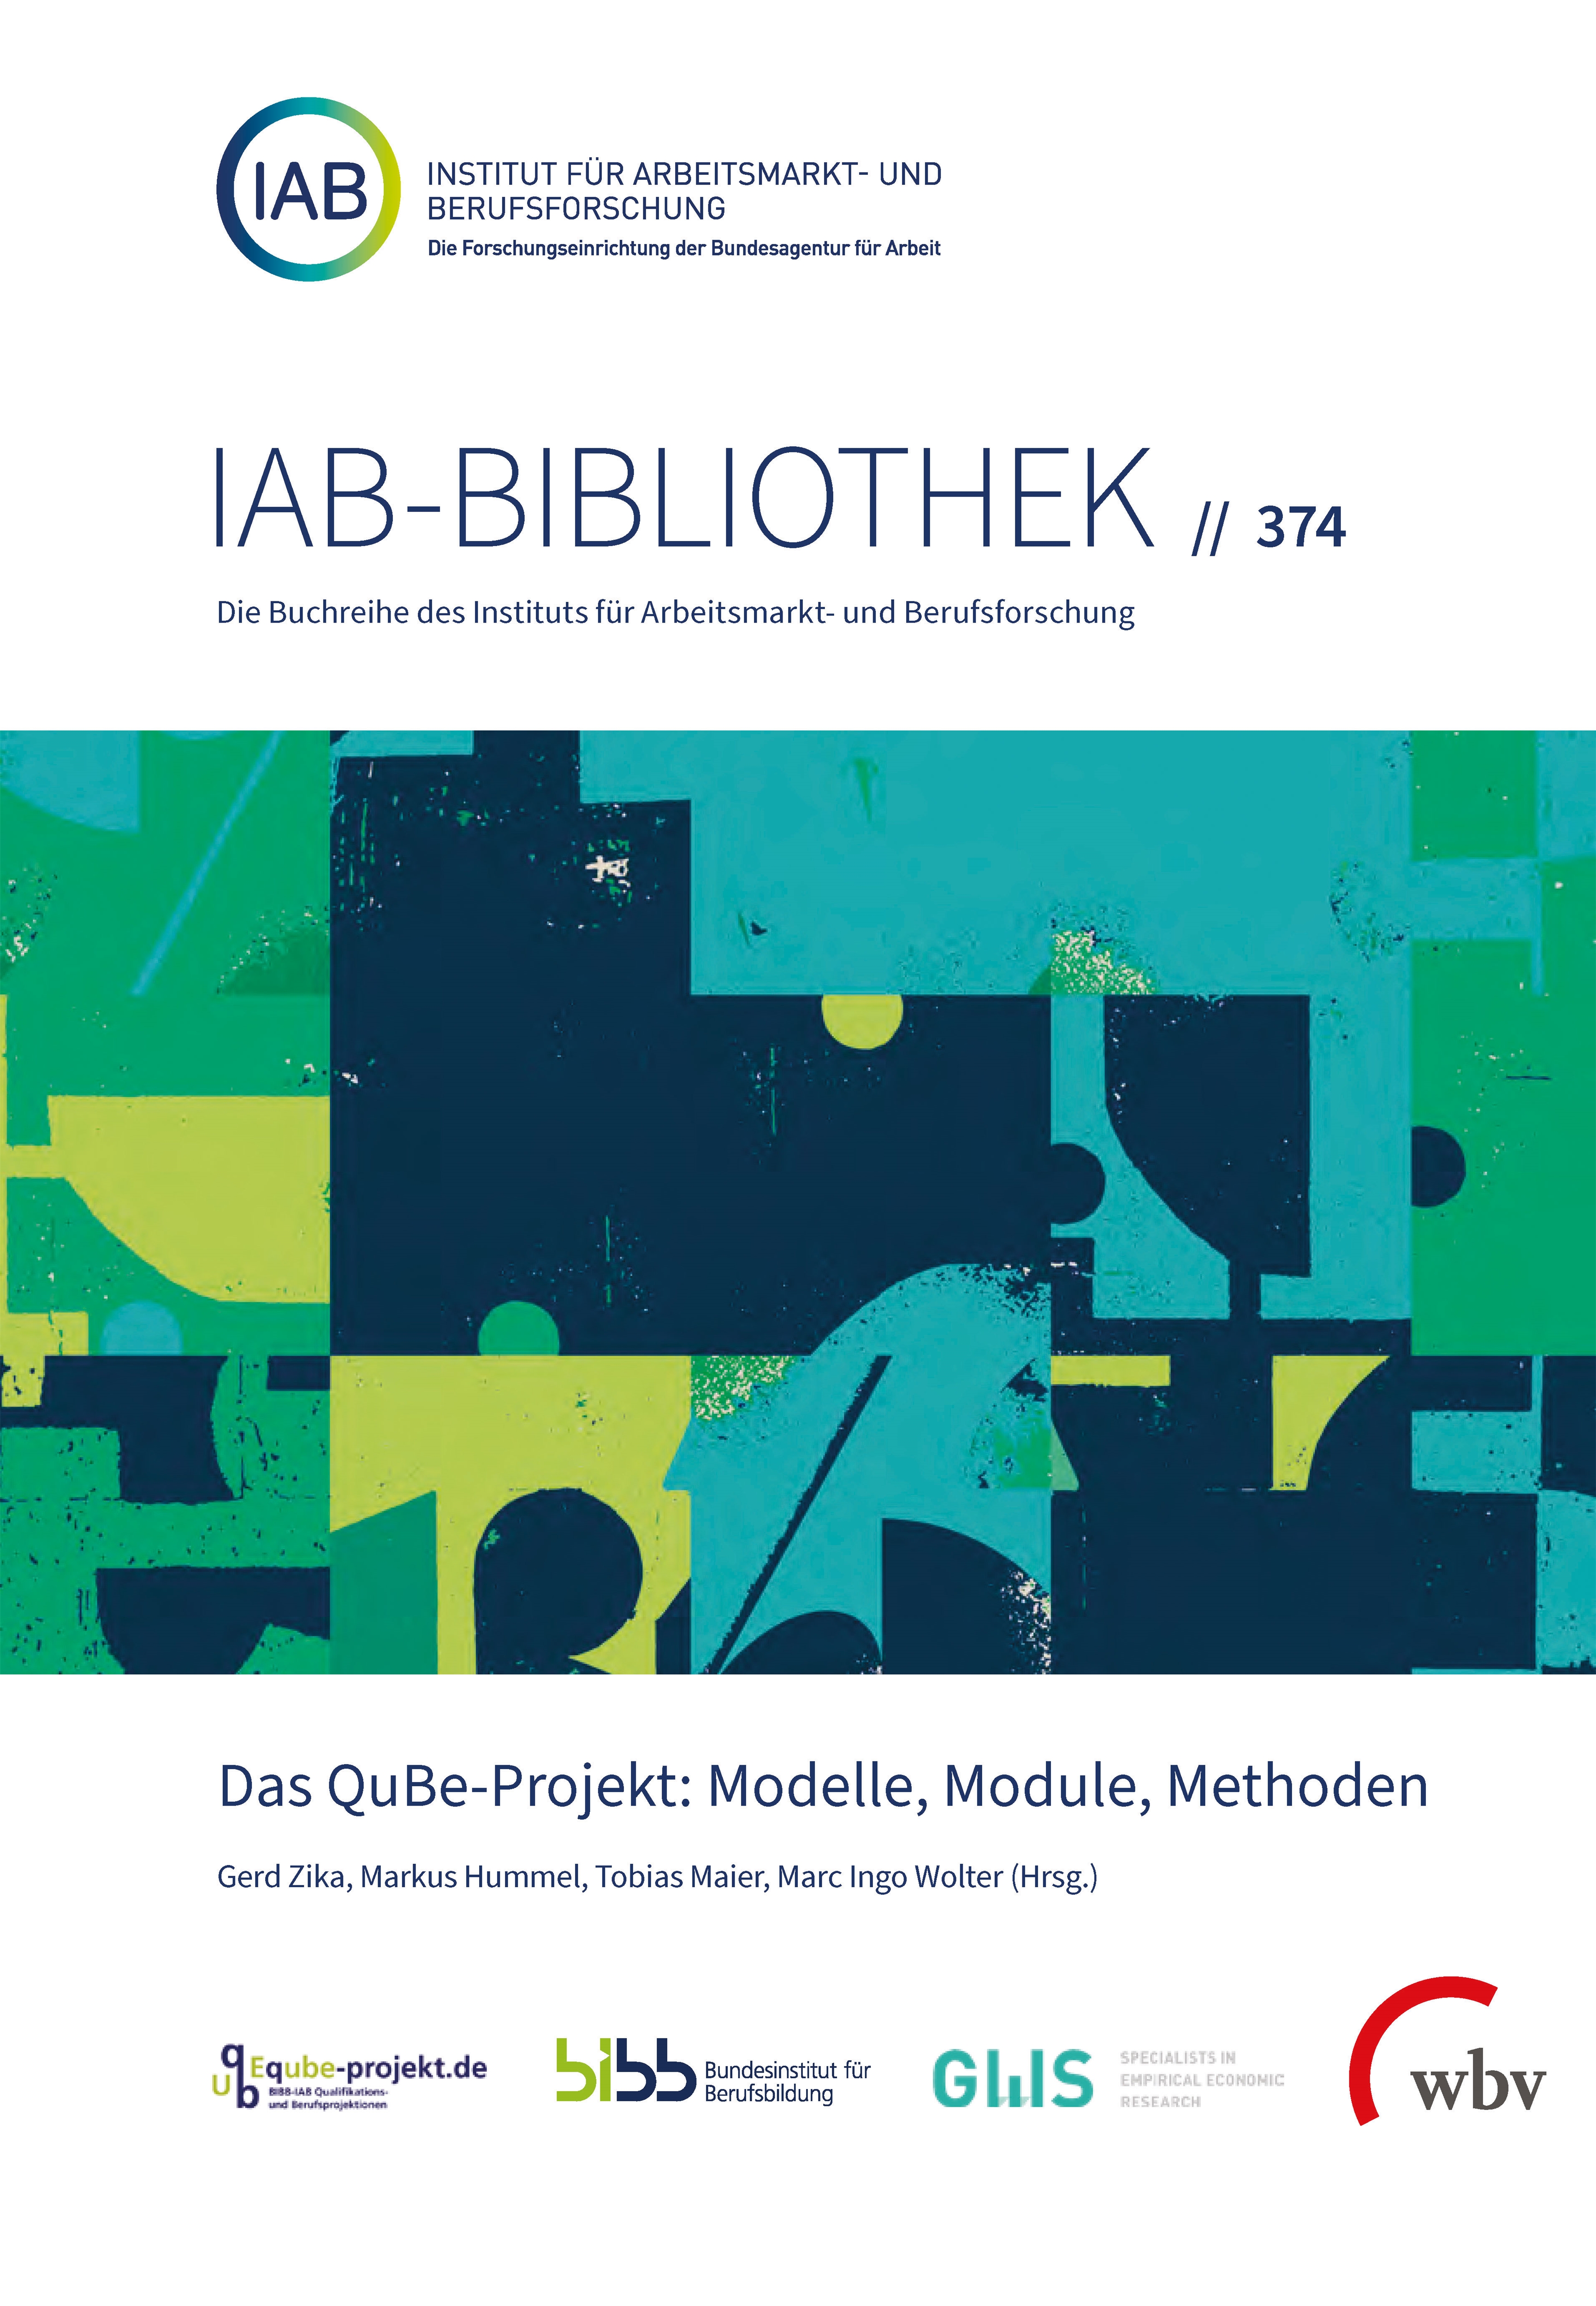 Das QuBe-Projekt: Modelle, Module, Methoden